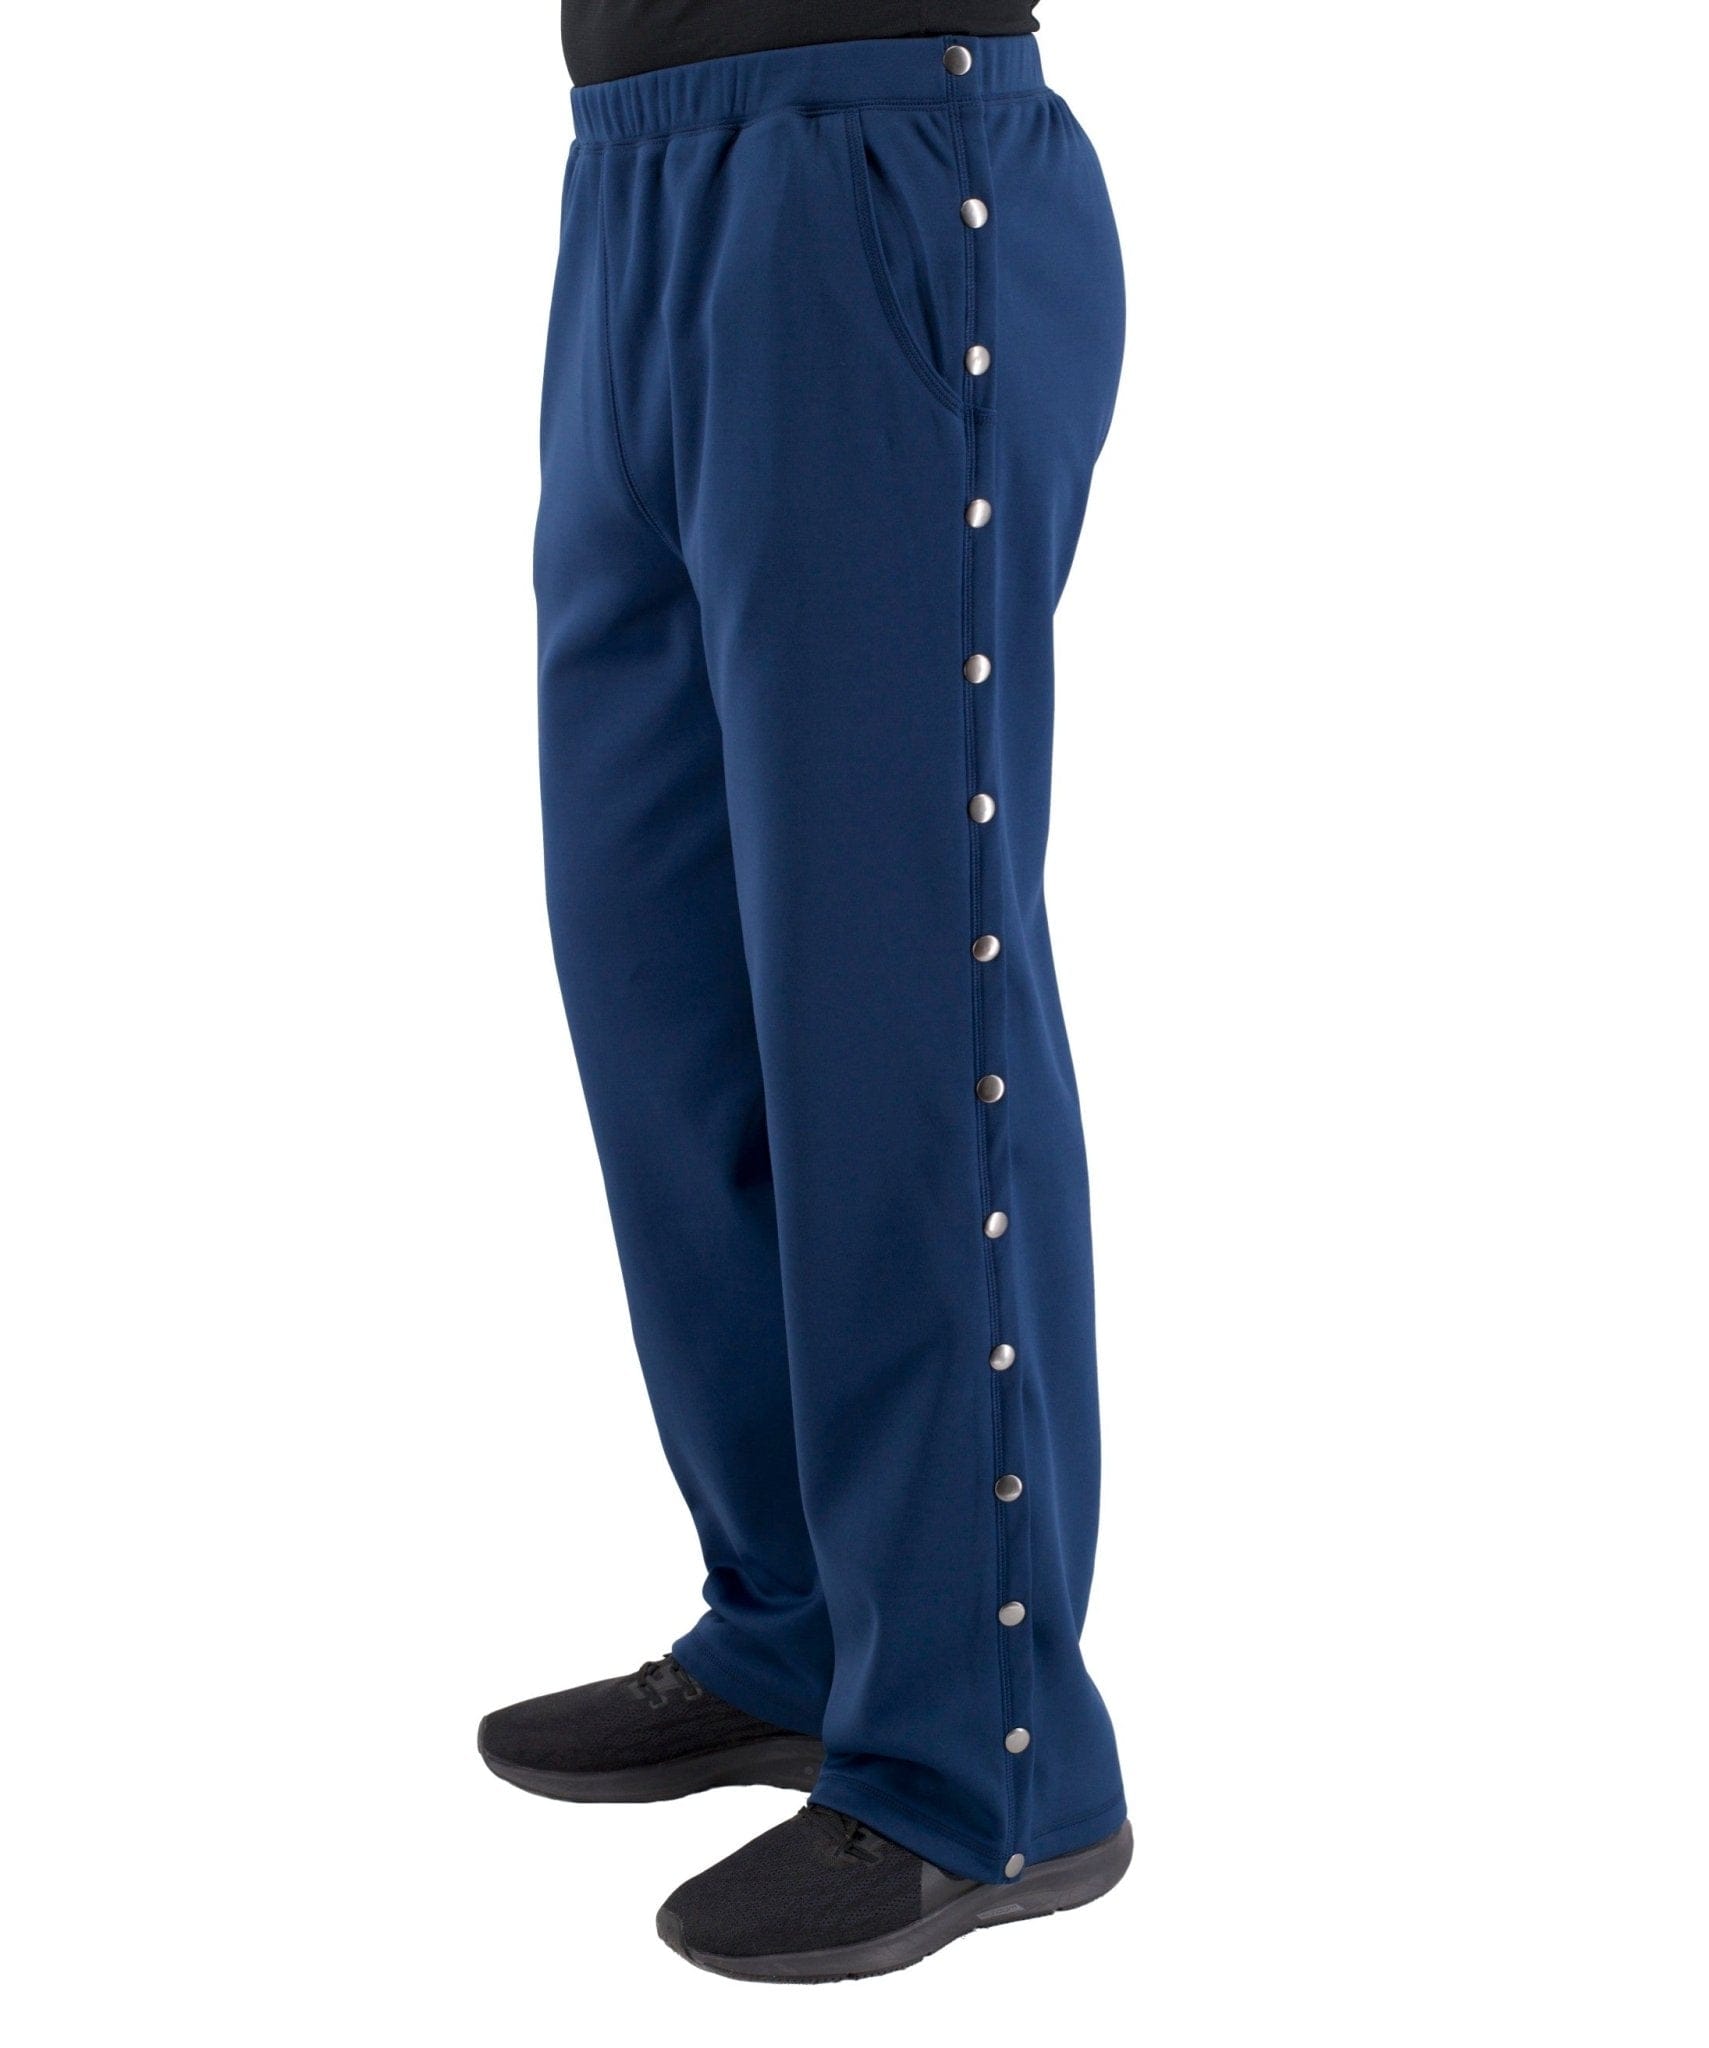 Navy Blue Low Rise Sports Pants - $27.95